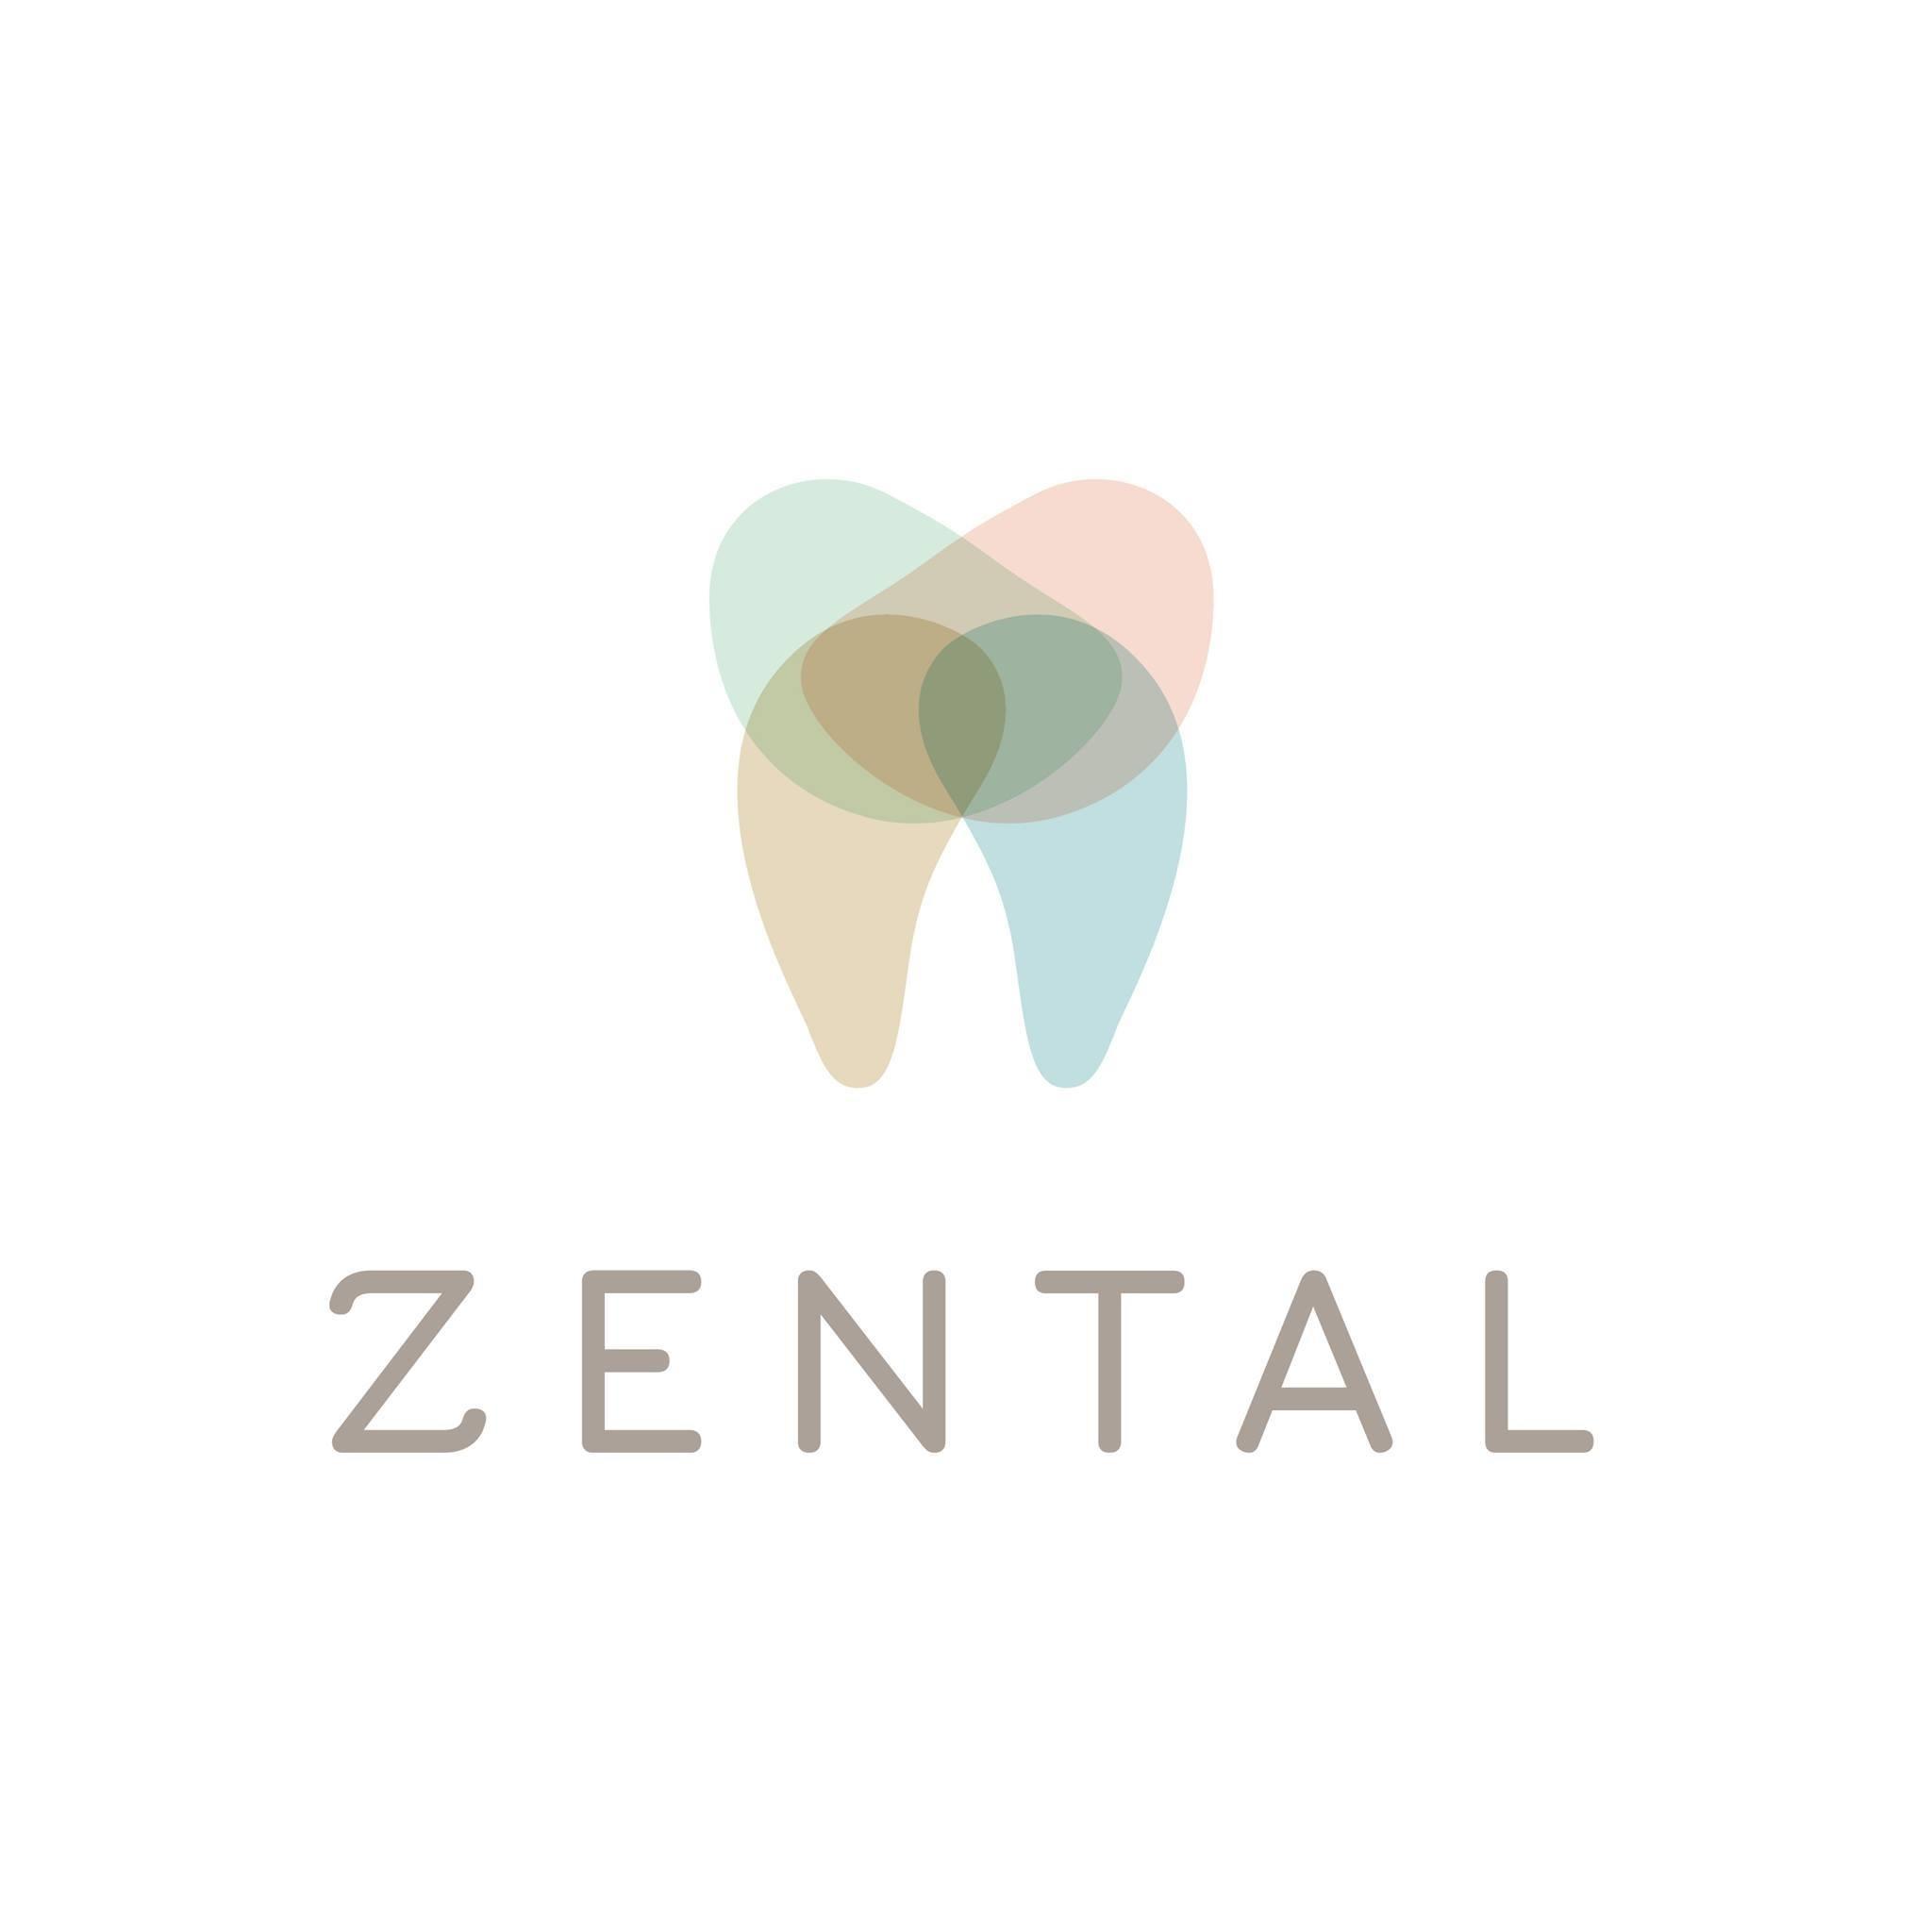 Zental Dental Earl's Court - London, London SW5 0EA - 020 3982 8602 | ShowMeLocal.com